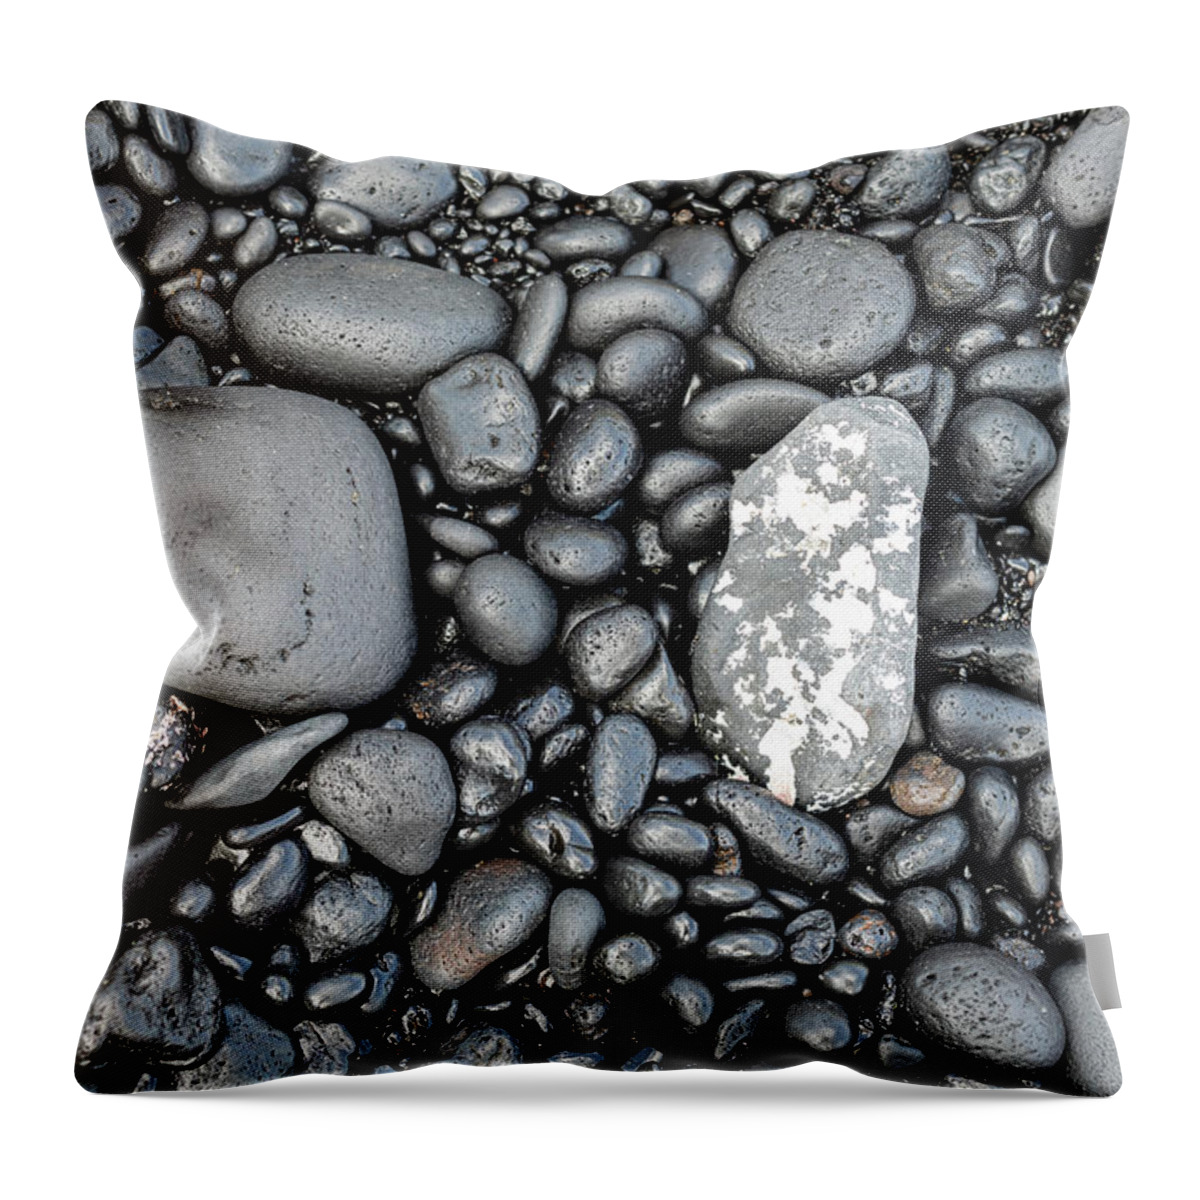 Black Beach Throw Pillow featuring the photograph Black Beach Stones by Craig A Walker